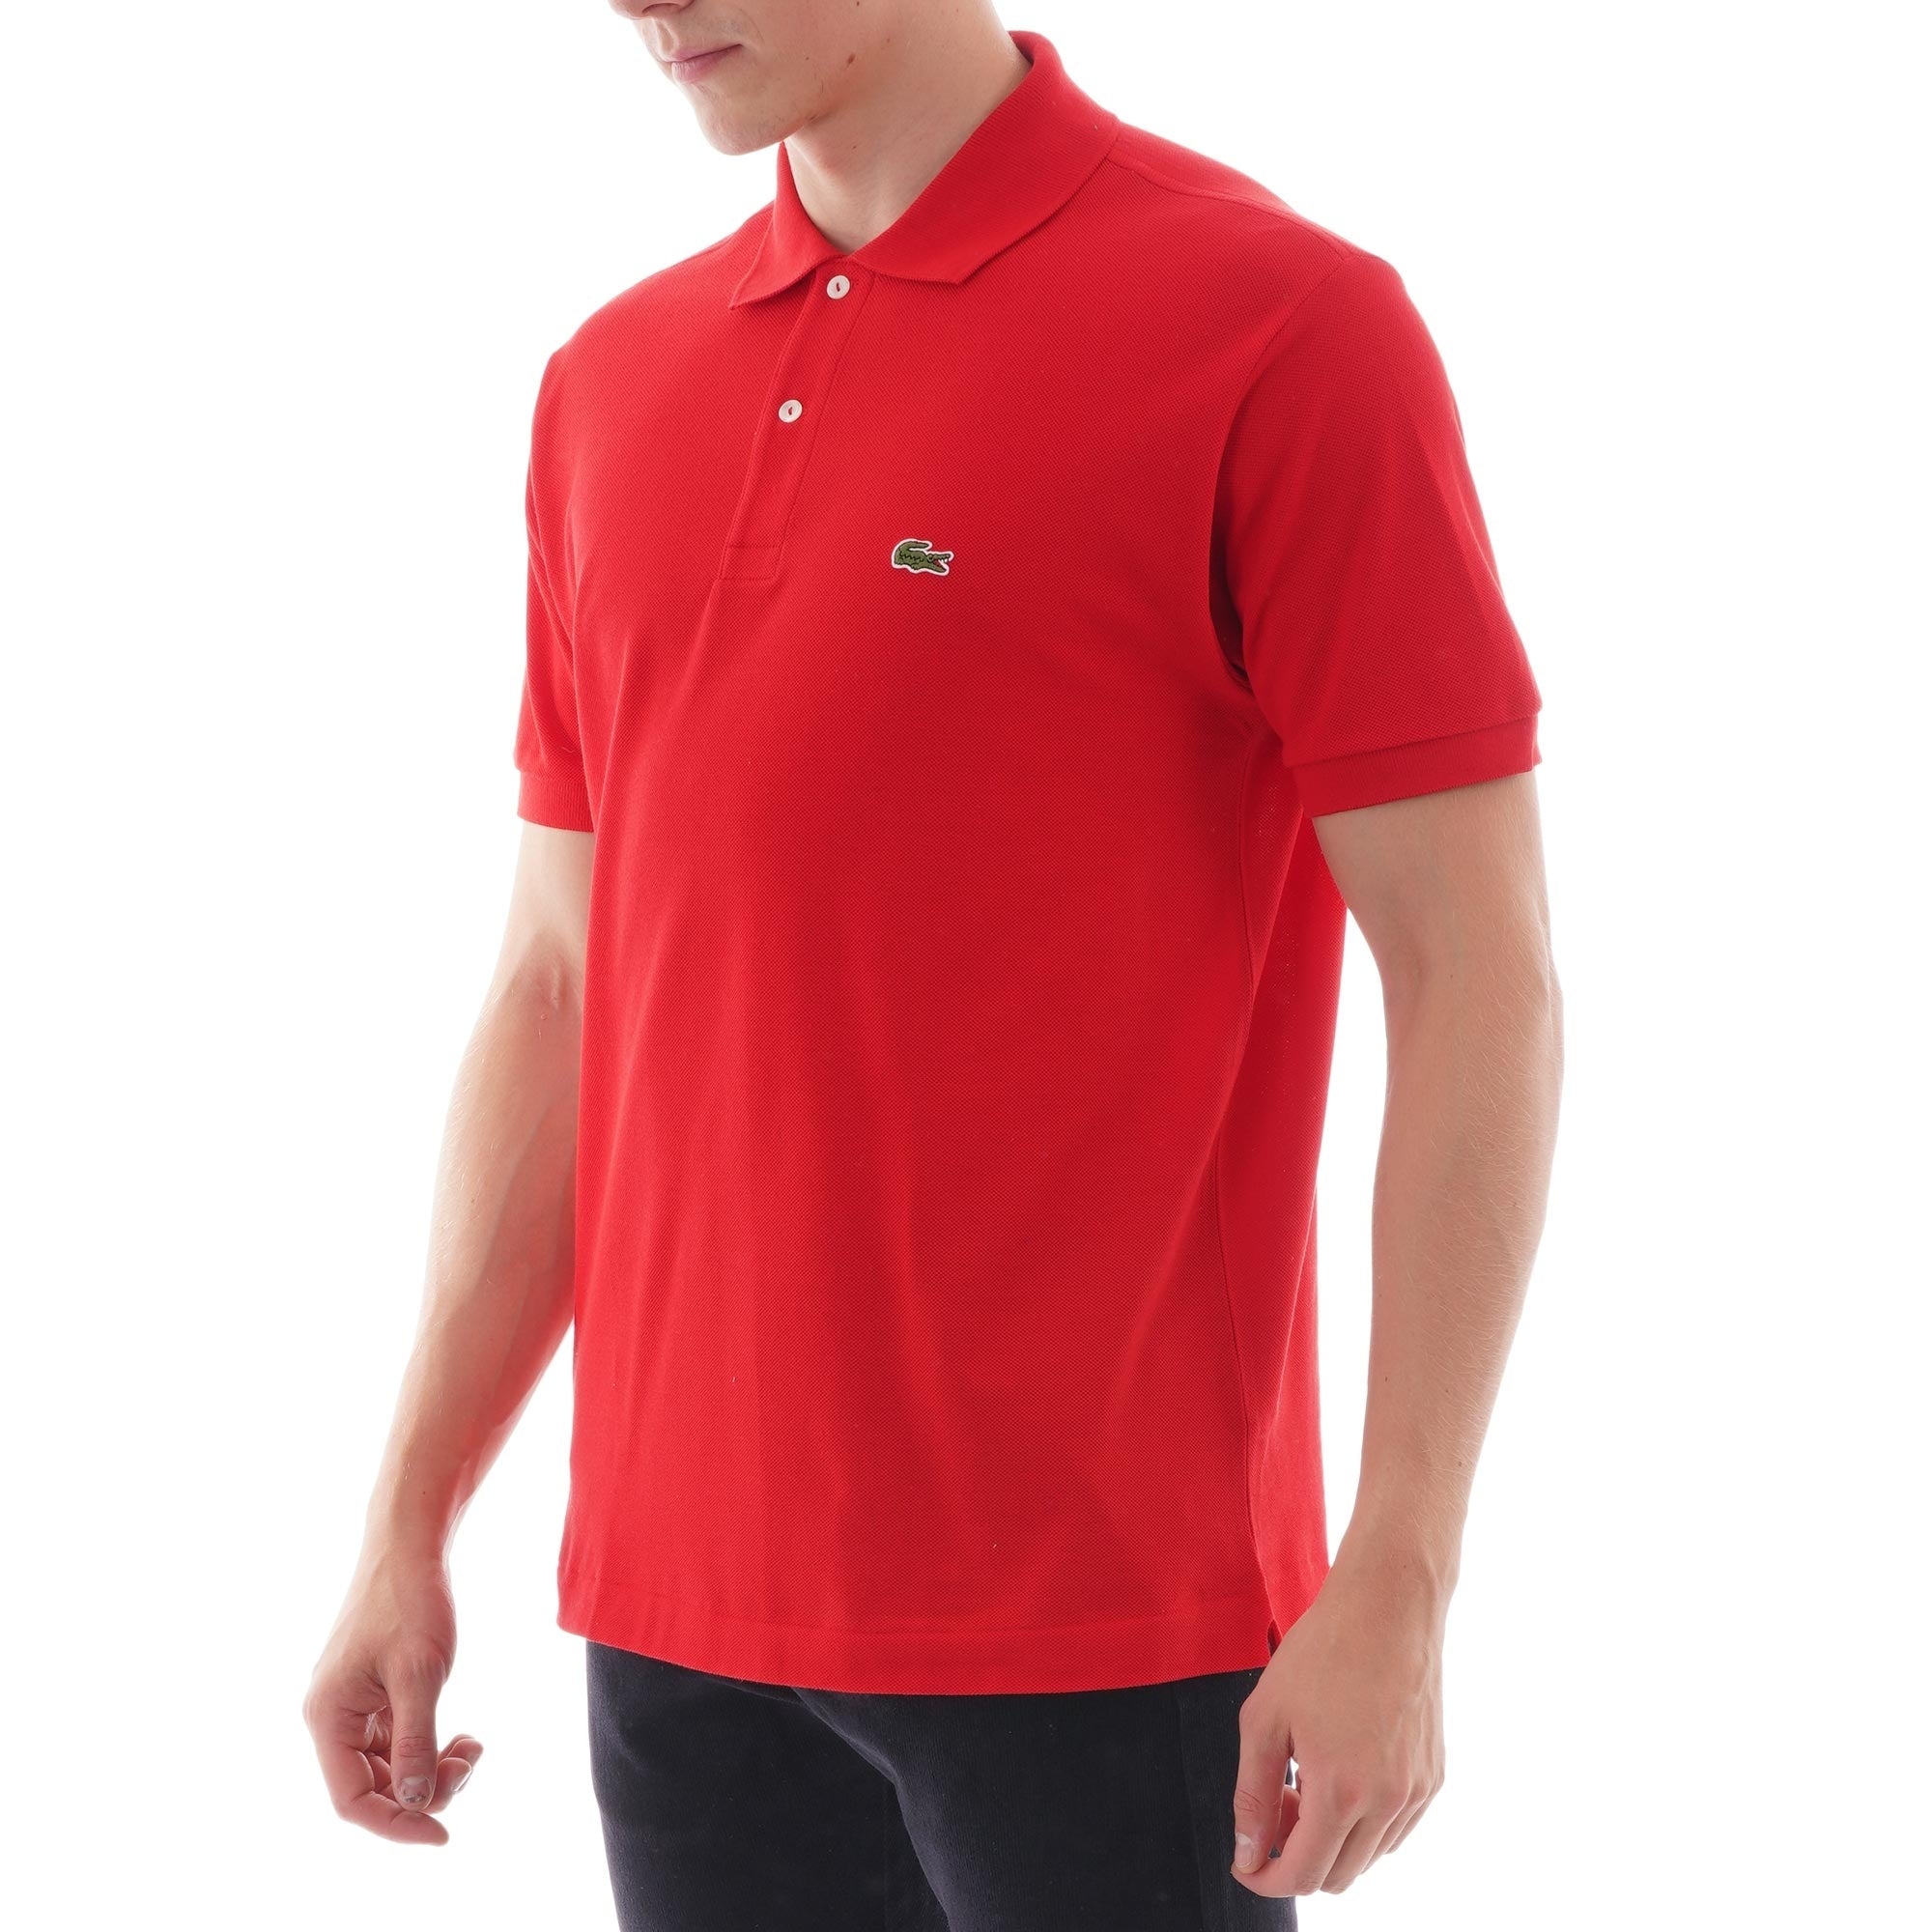 Camisa Polo Lacoste Classic Fit Vermelho Rubi - HERRERA BRAND